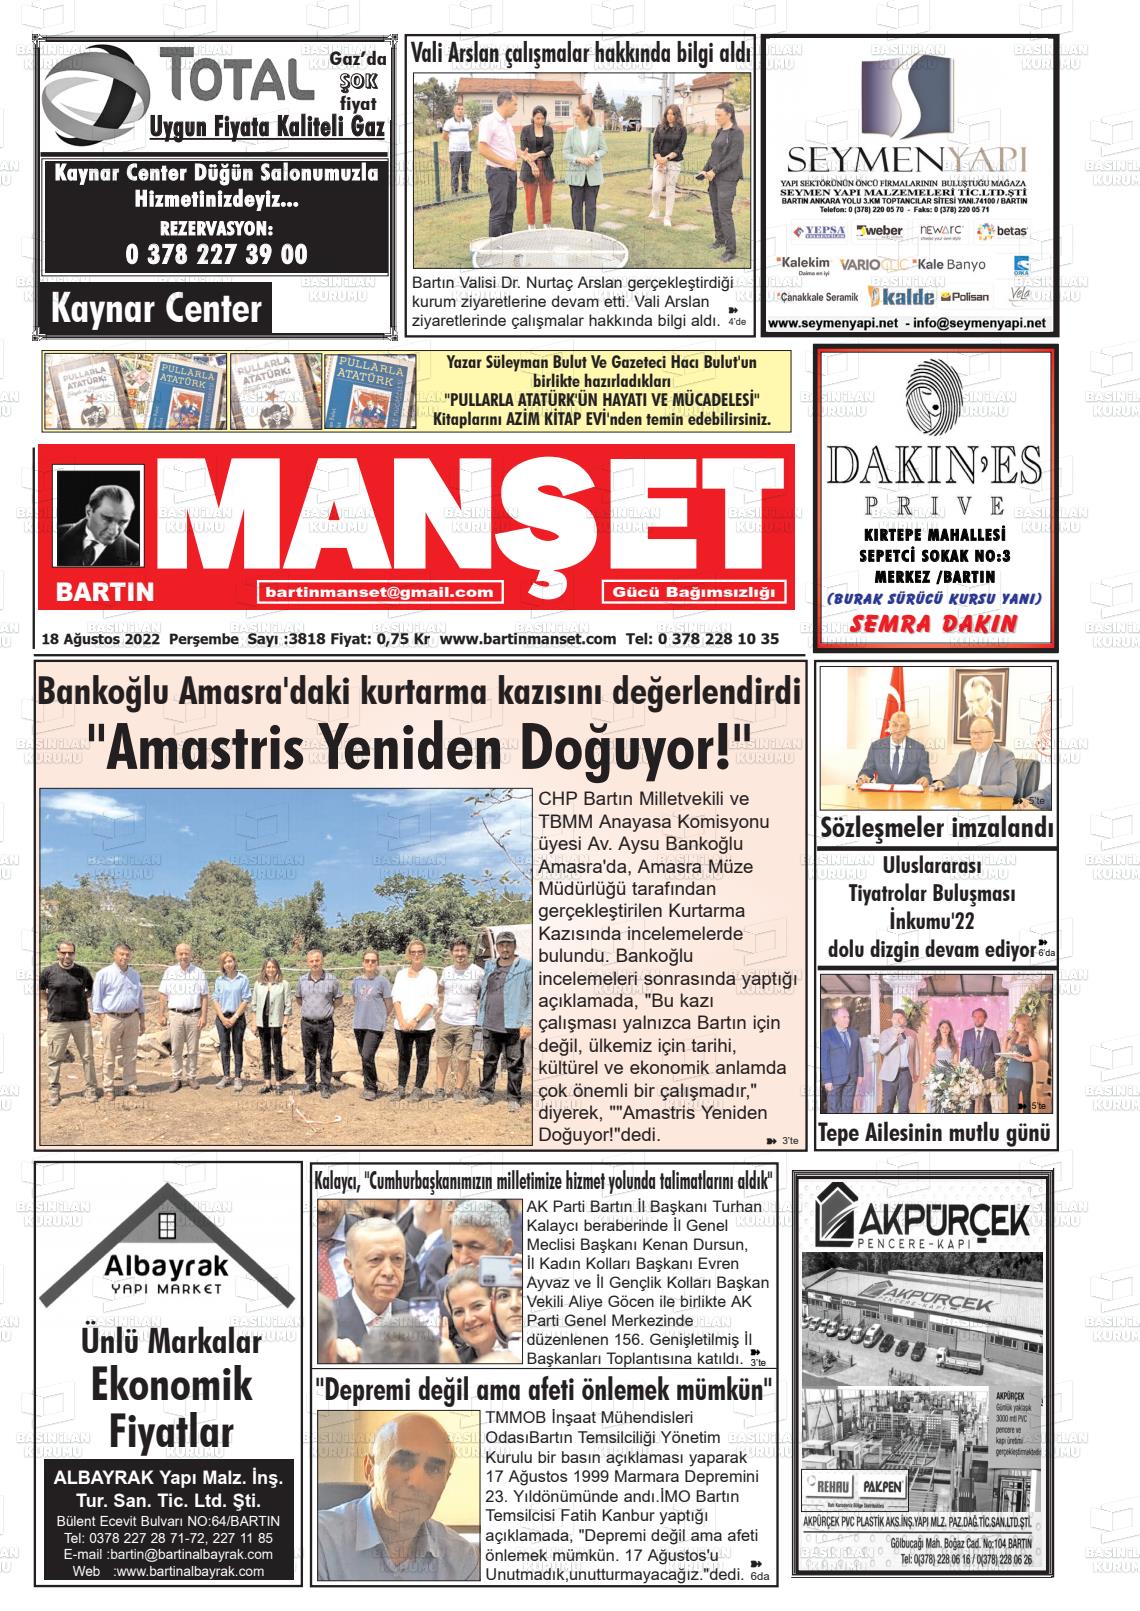 18 Ağustos 2022 Bartın Manşet Gazete Manşeti